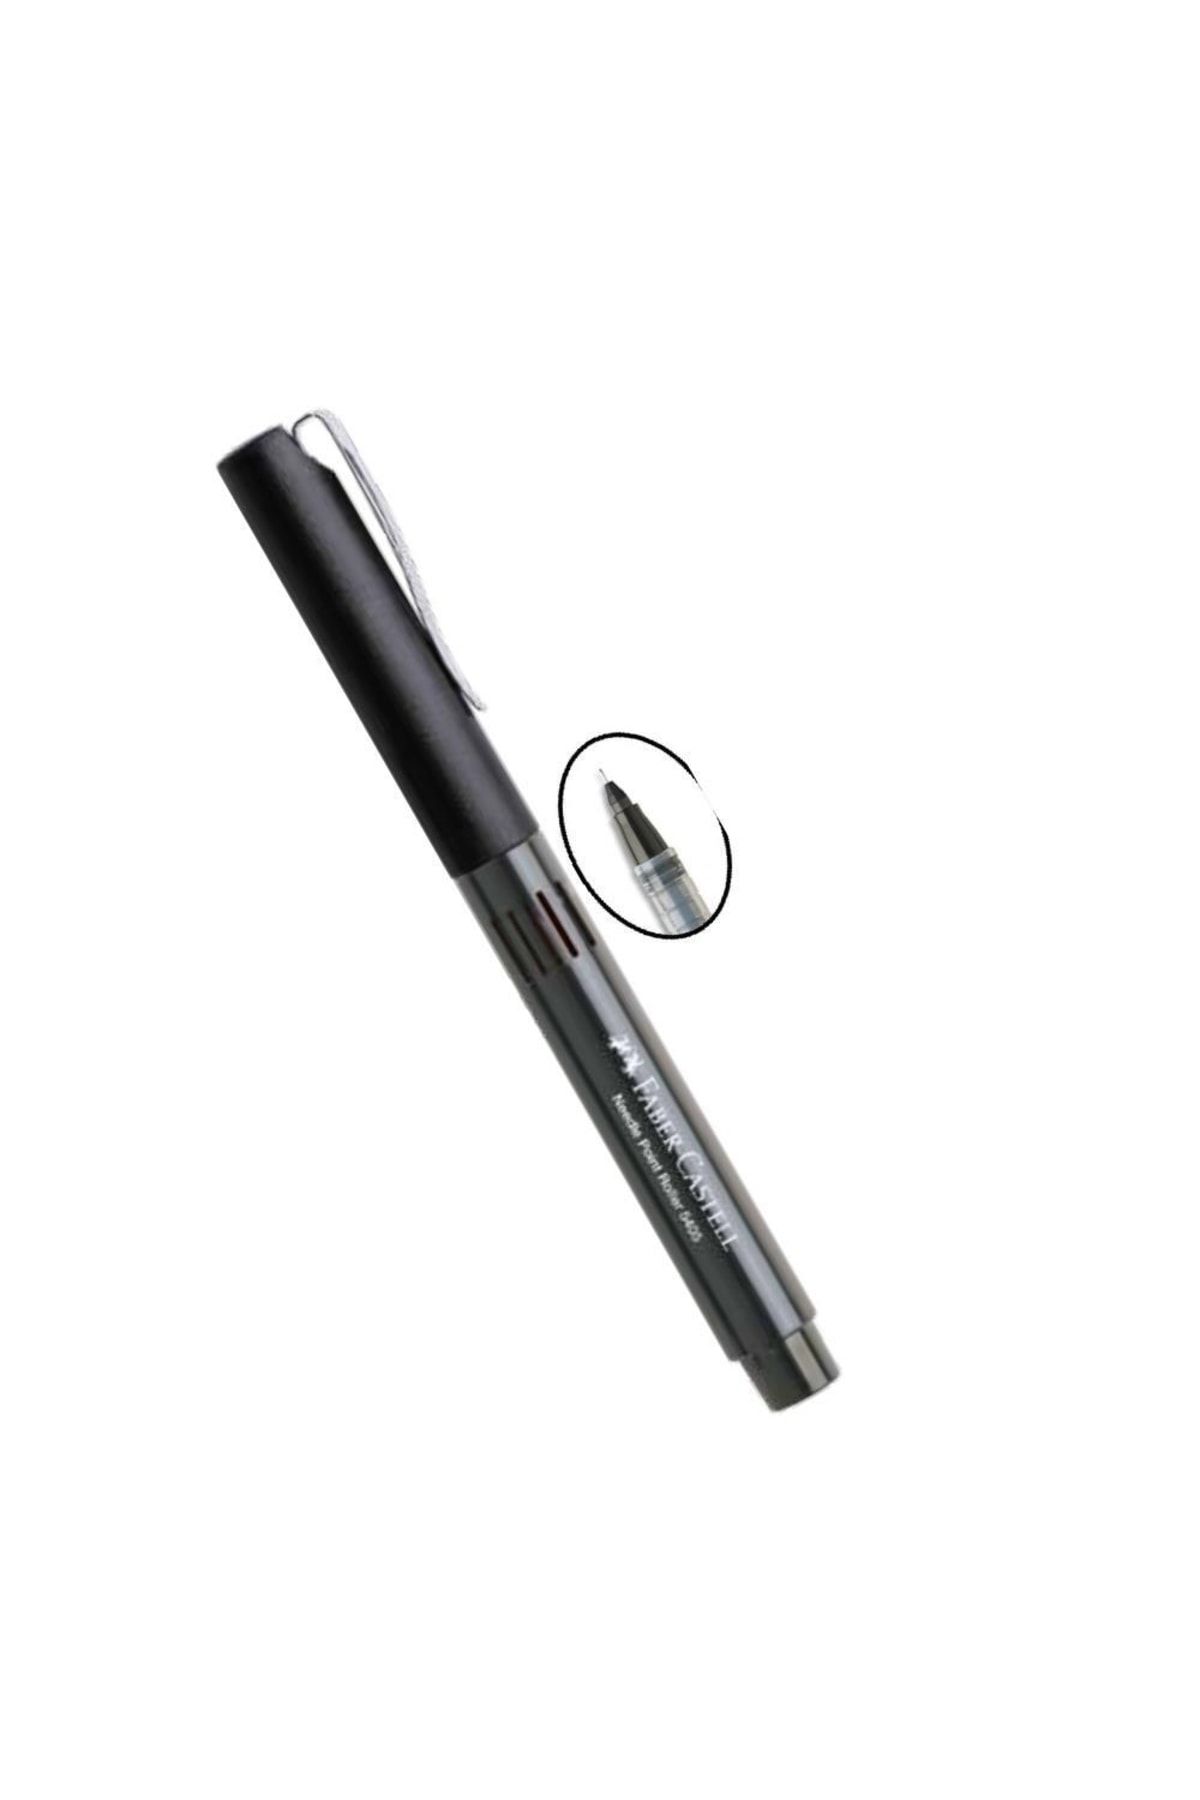 Faber Castell Siyah Pilot Kalem Iğne Uçlu 0.5 Needle Point Roller 1 Adet 0,5 Uçlu Pilot Kalem Siyah